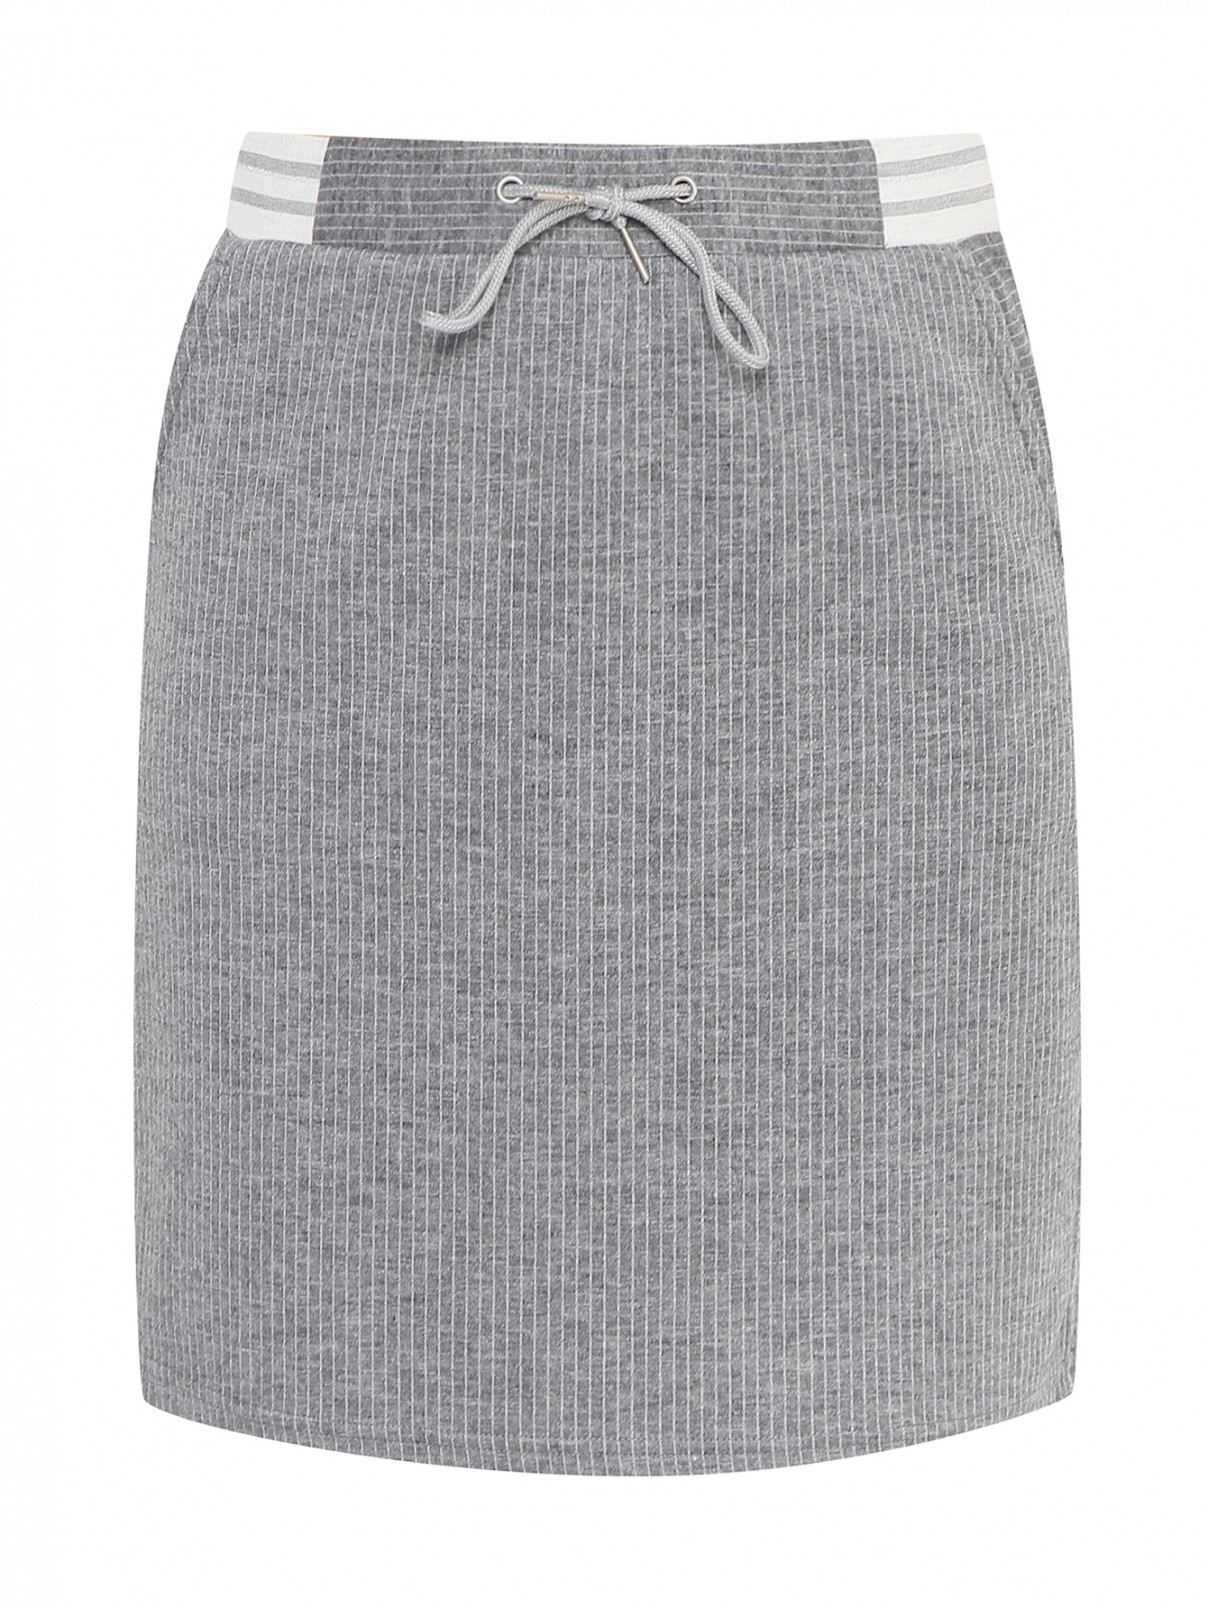 Мини-юбка с карманами Comma  –  Общий вид  – Цвет:  Серый